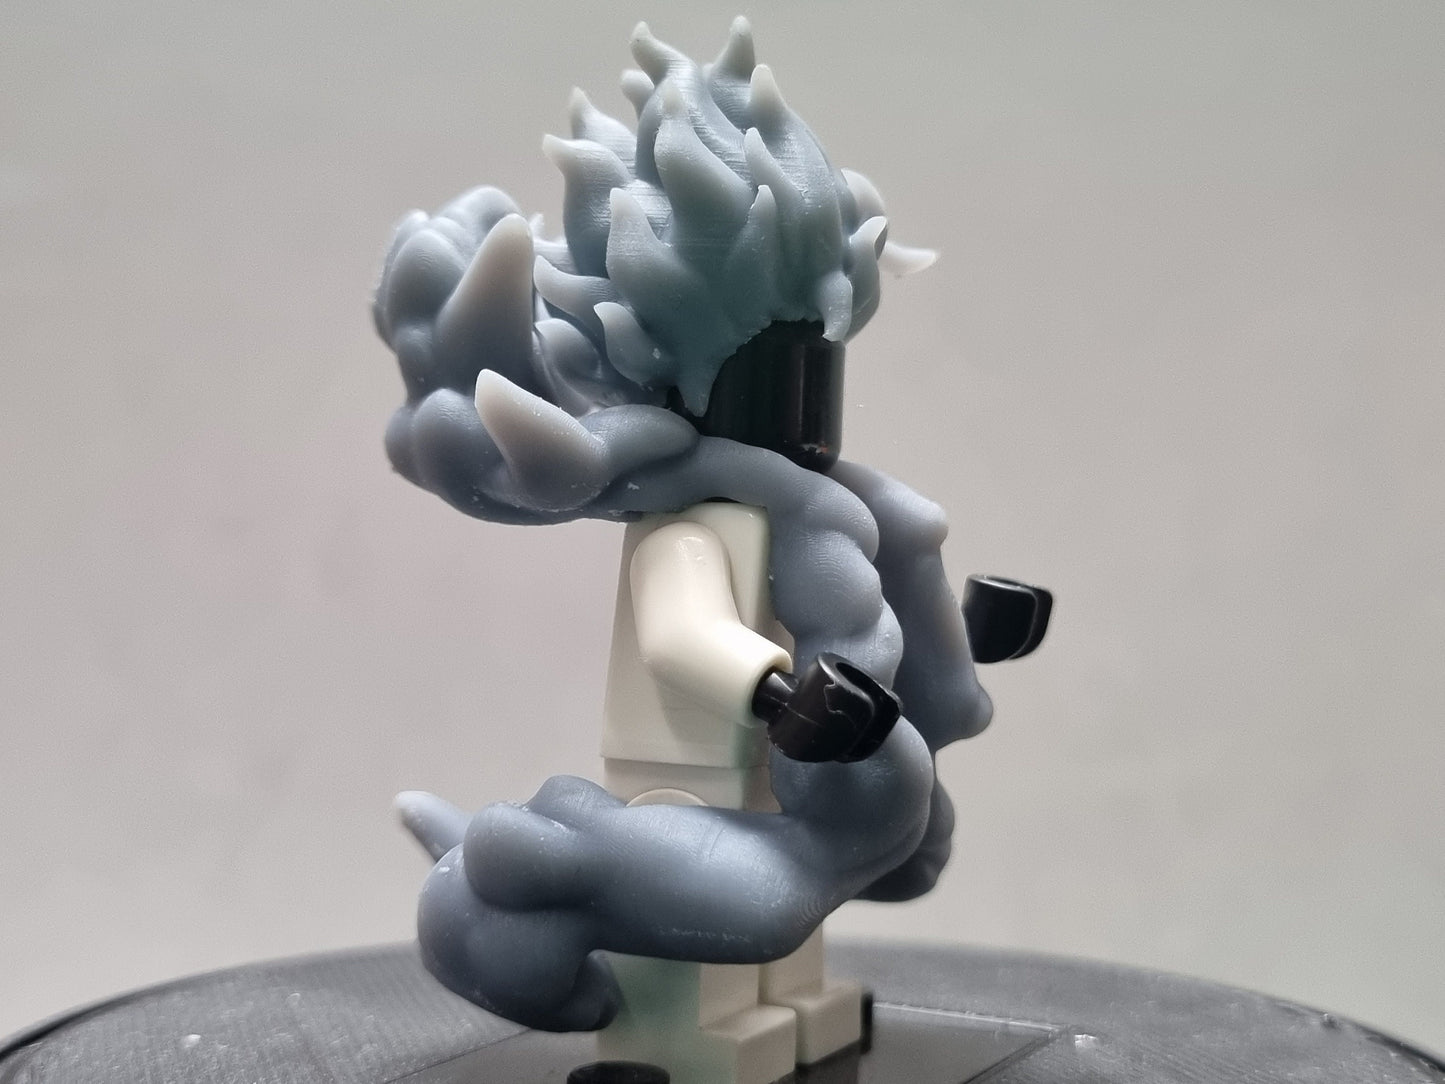 Building toy custom 3D printed cloud man